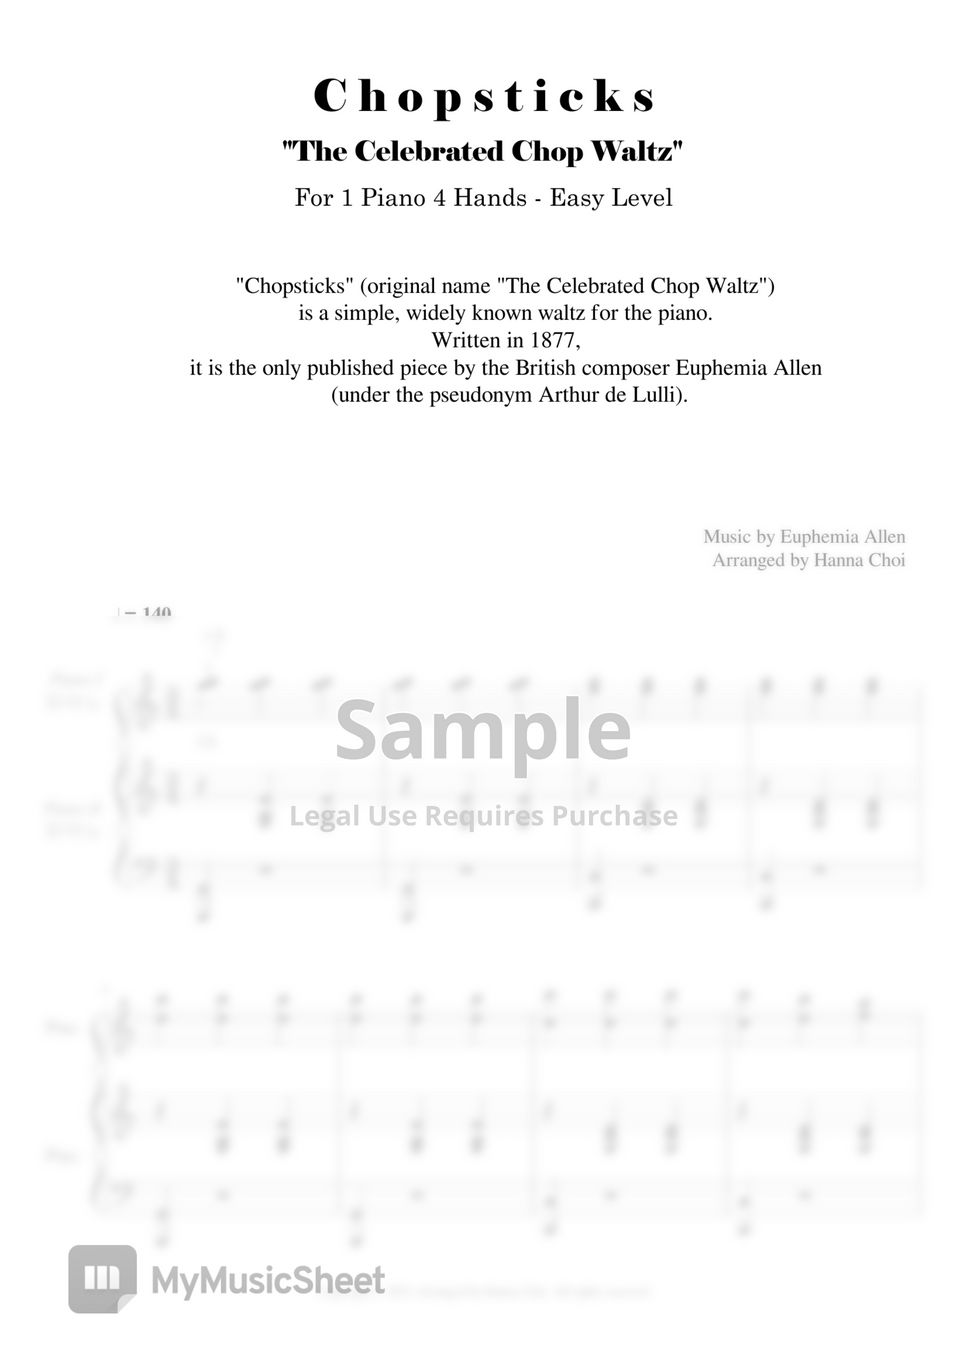 de Lulli - Chopsticks (젓가락 행진곡)- 피아노 듀엣 (1Piano 4 Hands) (Easy Level) by HANNA